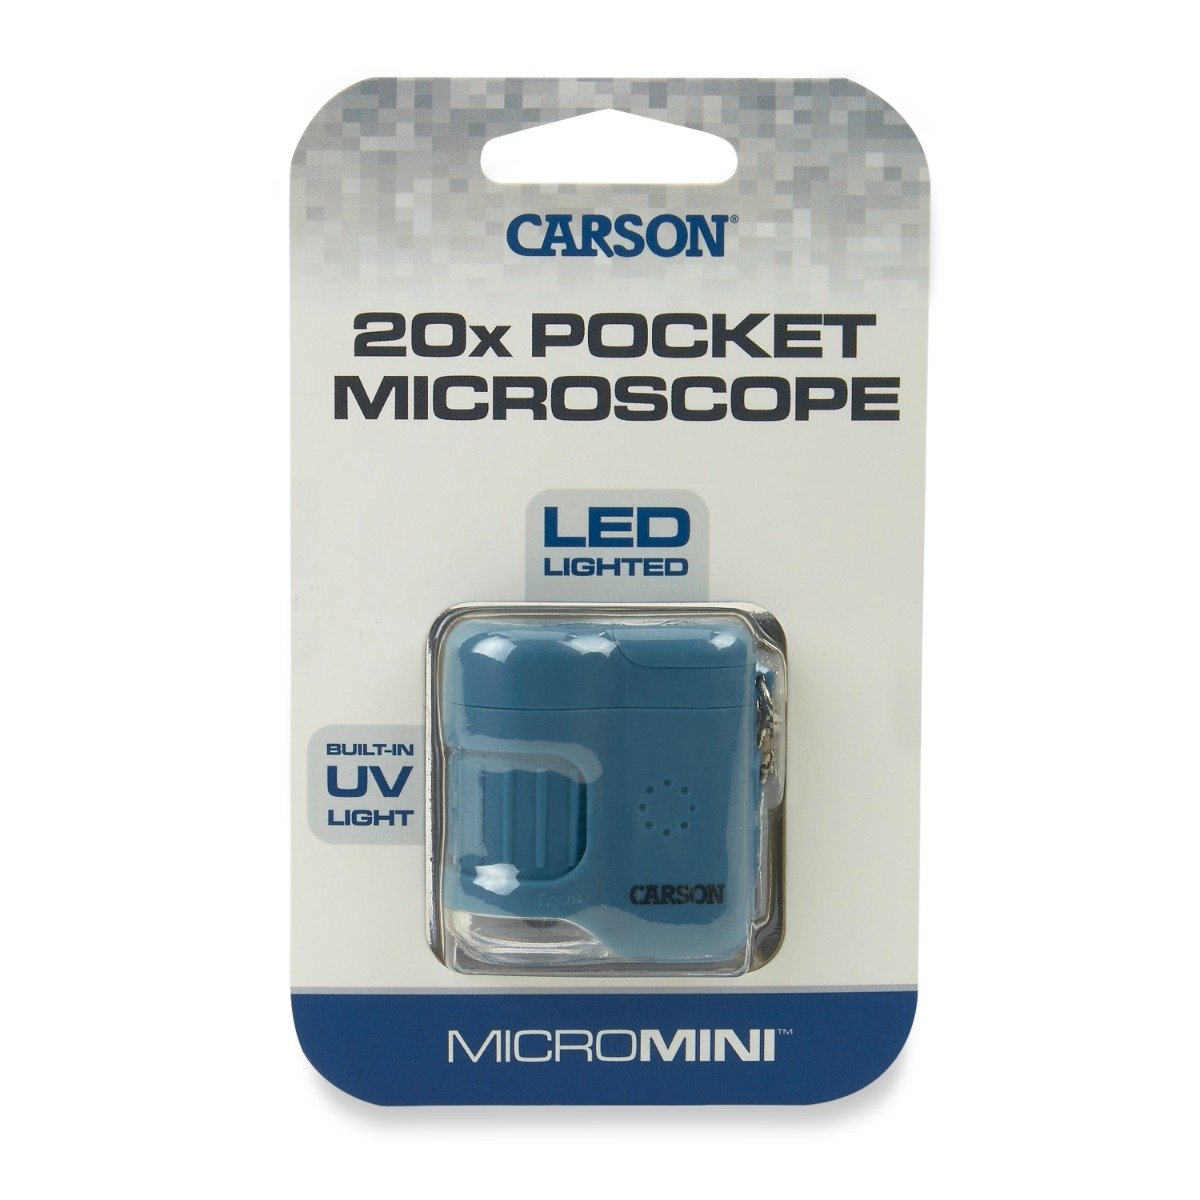 Microscop portabil cu breloc, marire 20x, Carson, MicroMini, Surf